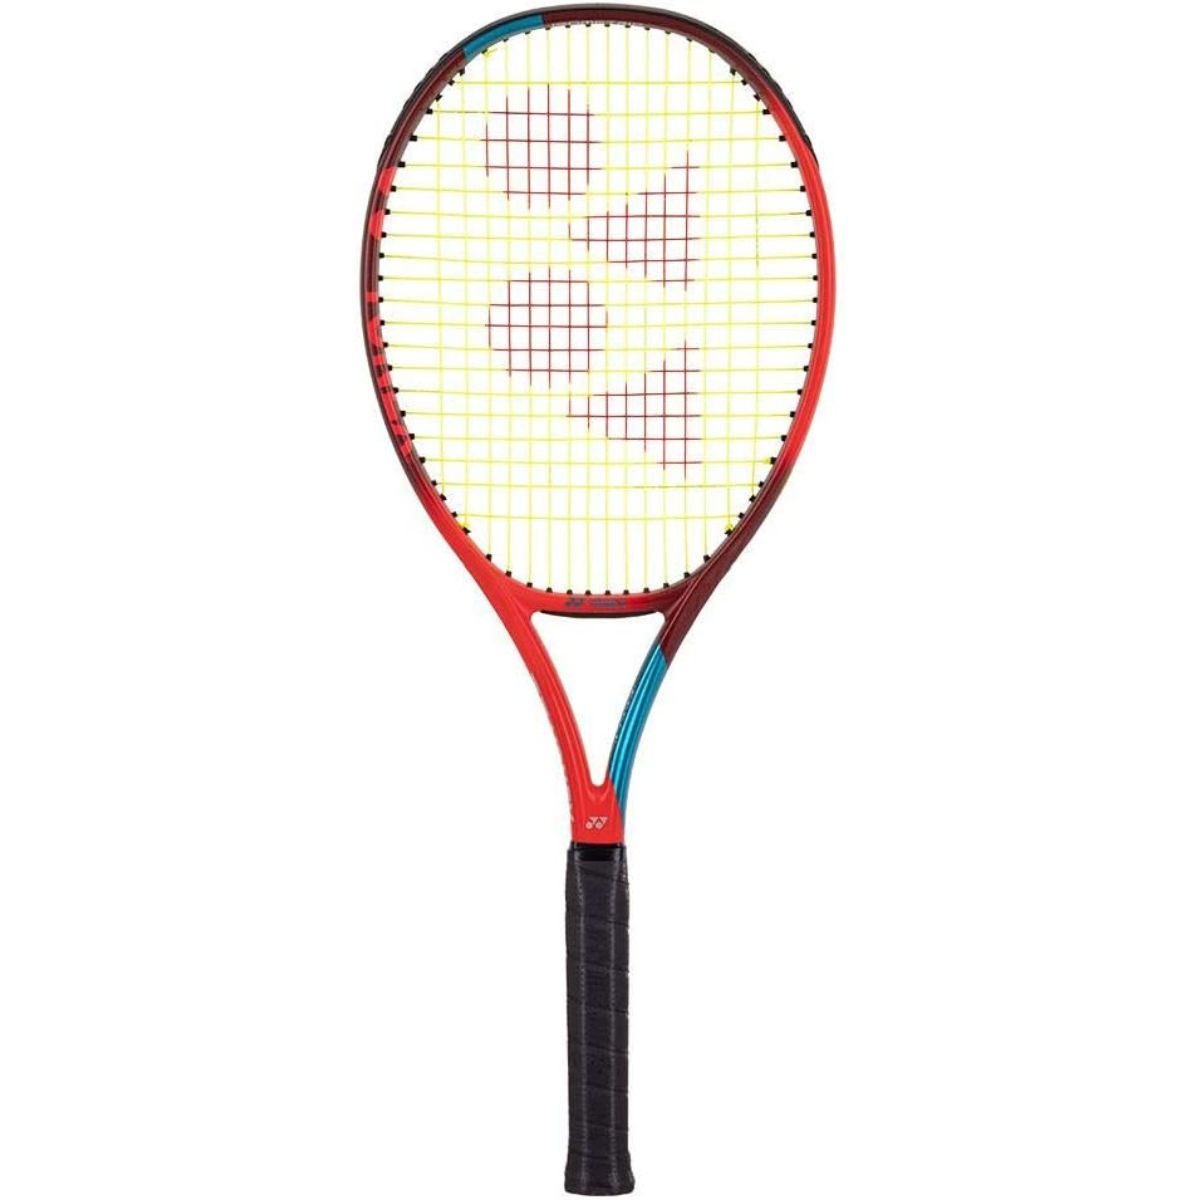 The Best Yonex Tennis Rackets Options: Yonex VCORE 100+